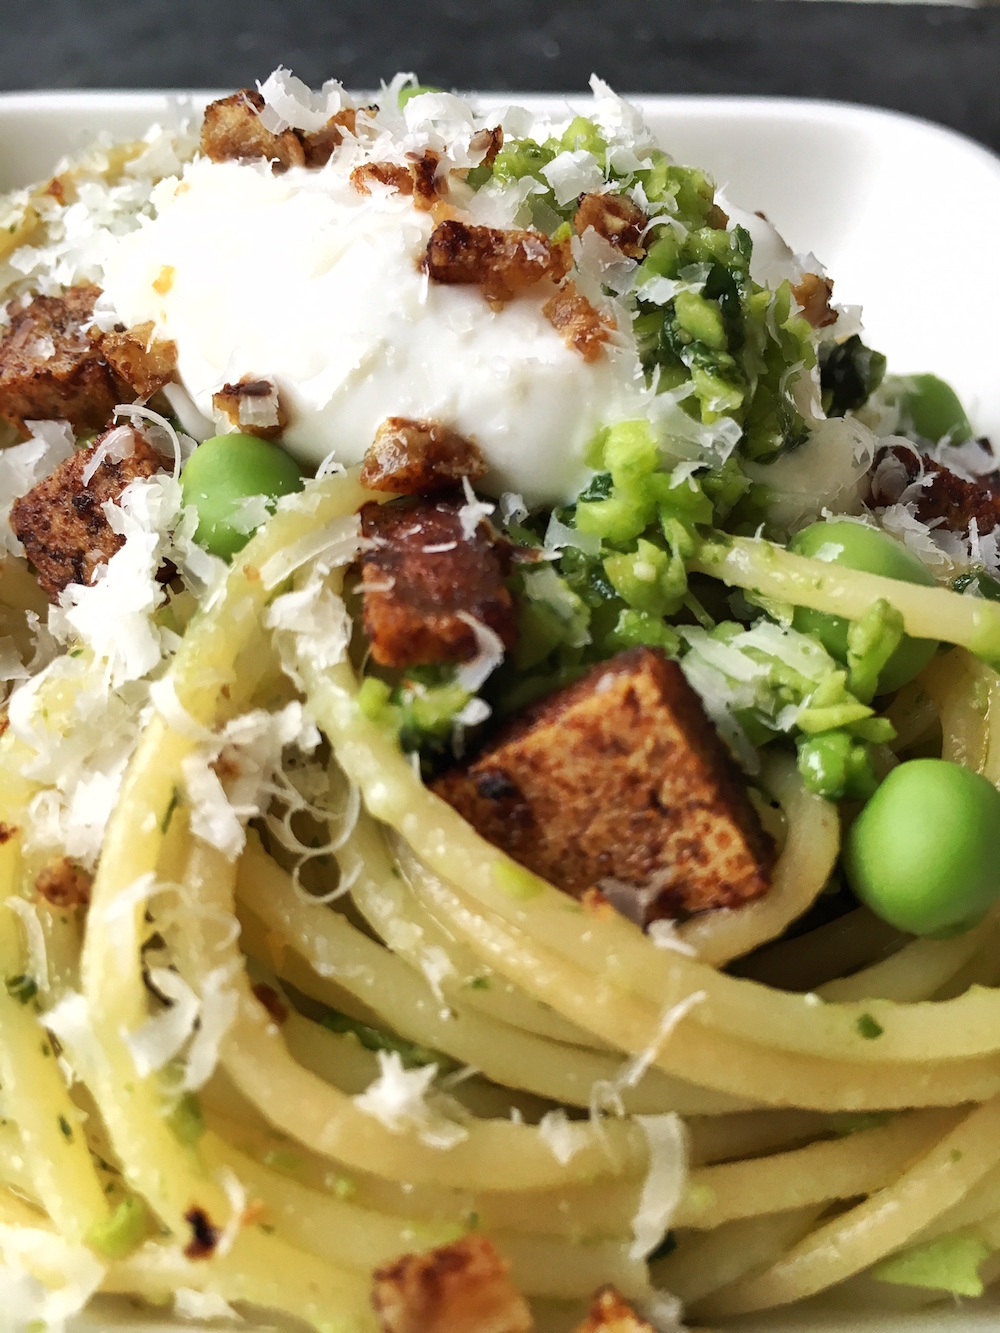 Pastamaniac: Spaghetti mit Erbsenpesto und Tofucrisps